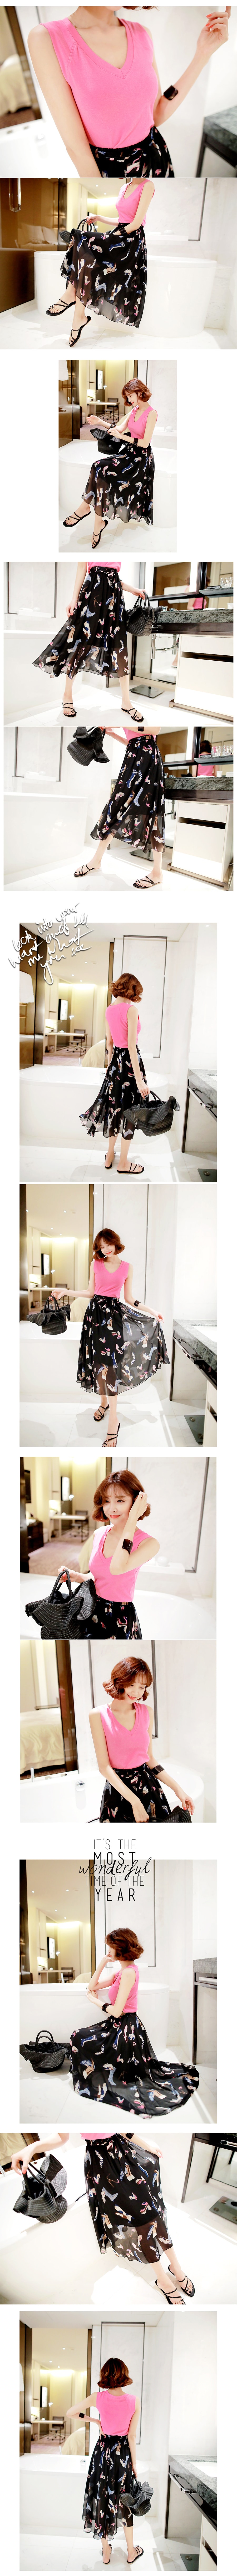 KOREA V-neck Sleeveless Tee #Pink+Flared Chiffon Skirt #Black 2 Pieces Set One Size(S-M) [Free Shipping]